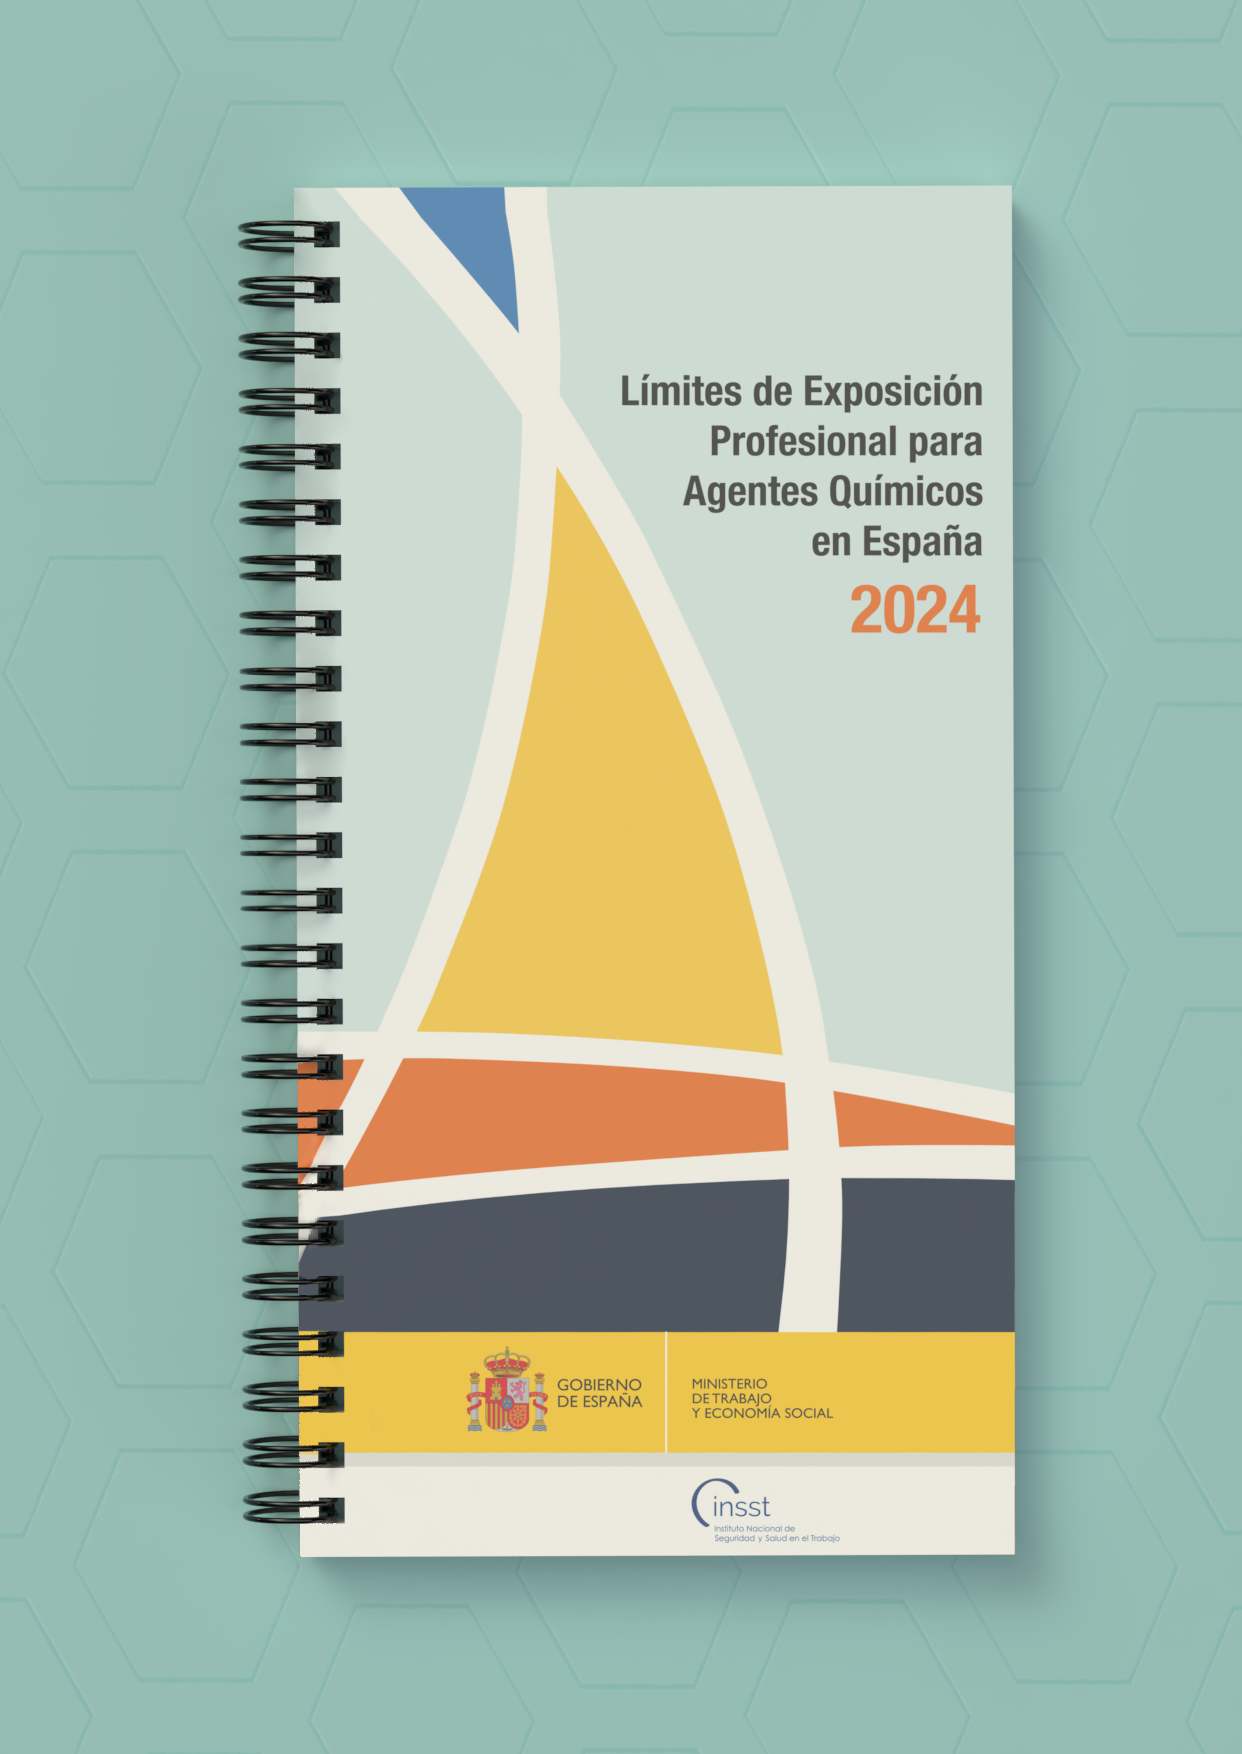 Imagen de un cuadernos sobre límites de exposición profesional para agentes químicos en España